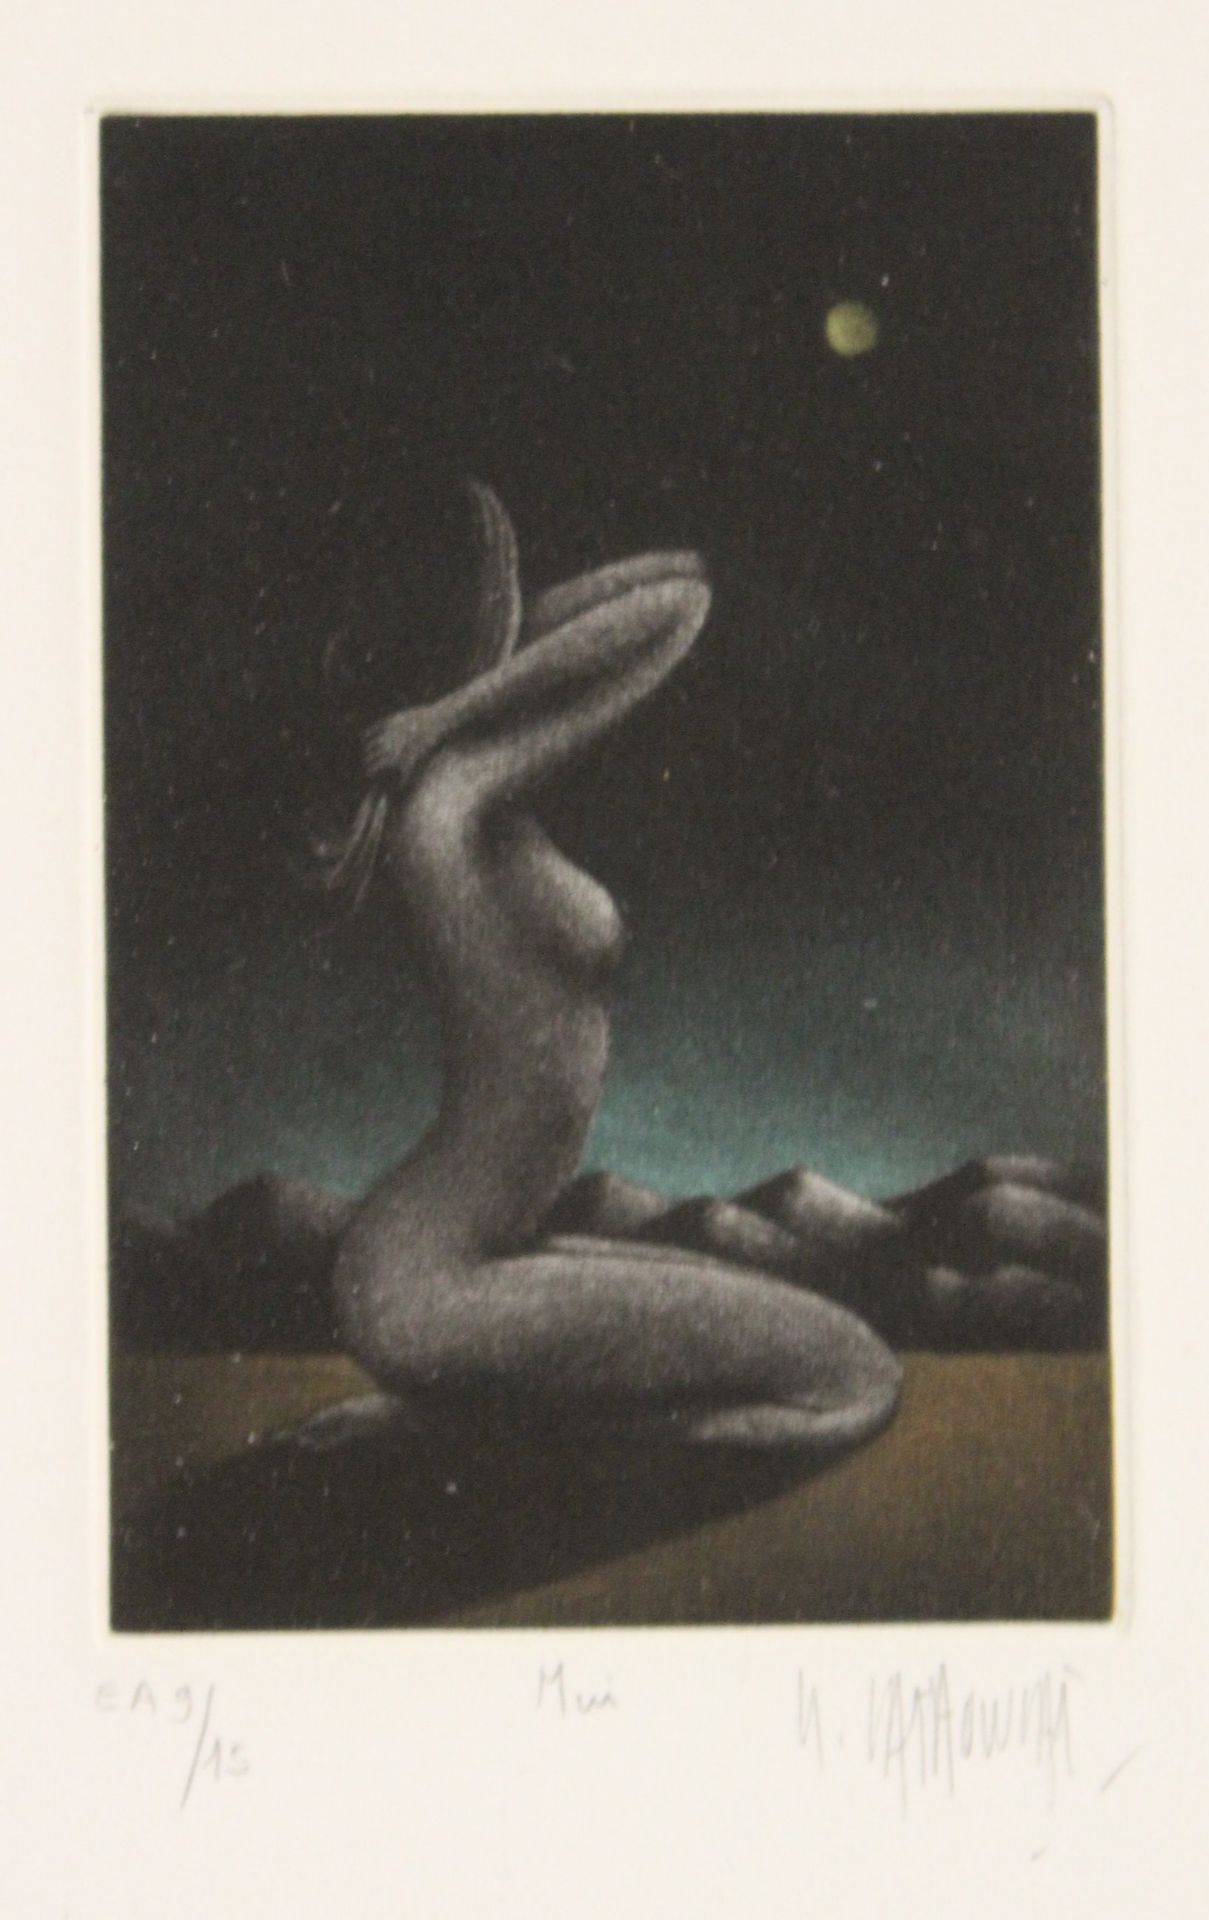 Bruno BRUNI (1935), Farbradierung, weibl. Akt, betitelt "MAI", E.A. 9/15, gut gerahmt/Glas, RG 69 x